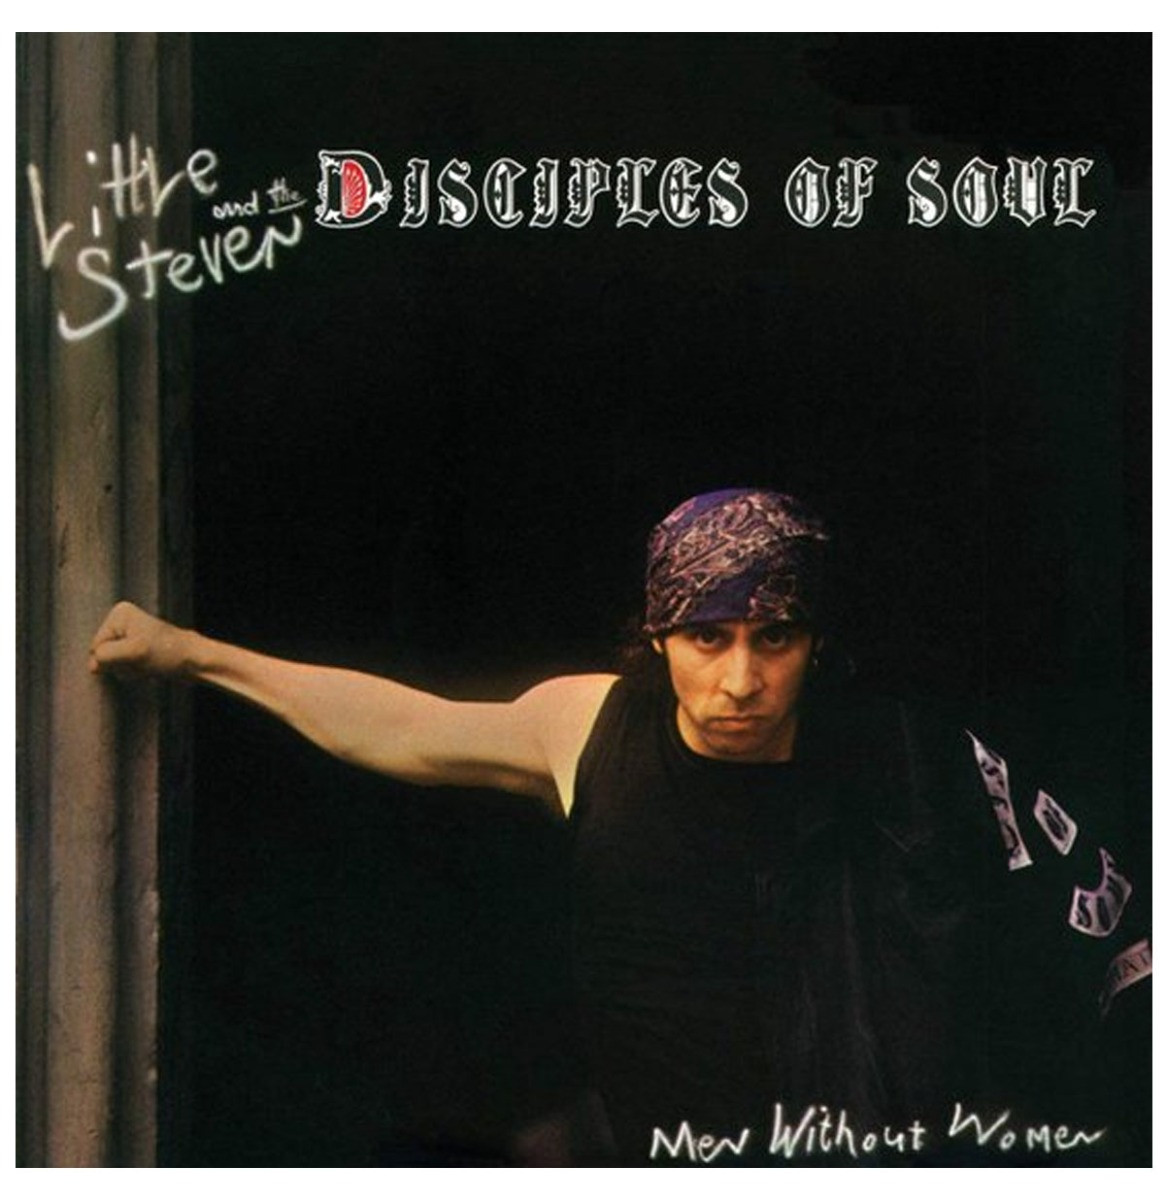 Little Steven And The Disciples Of Soul - Men Without Women LP